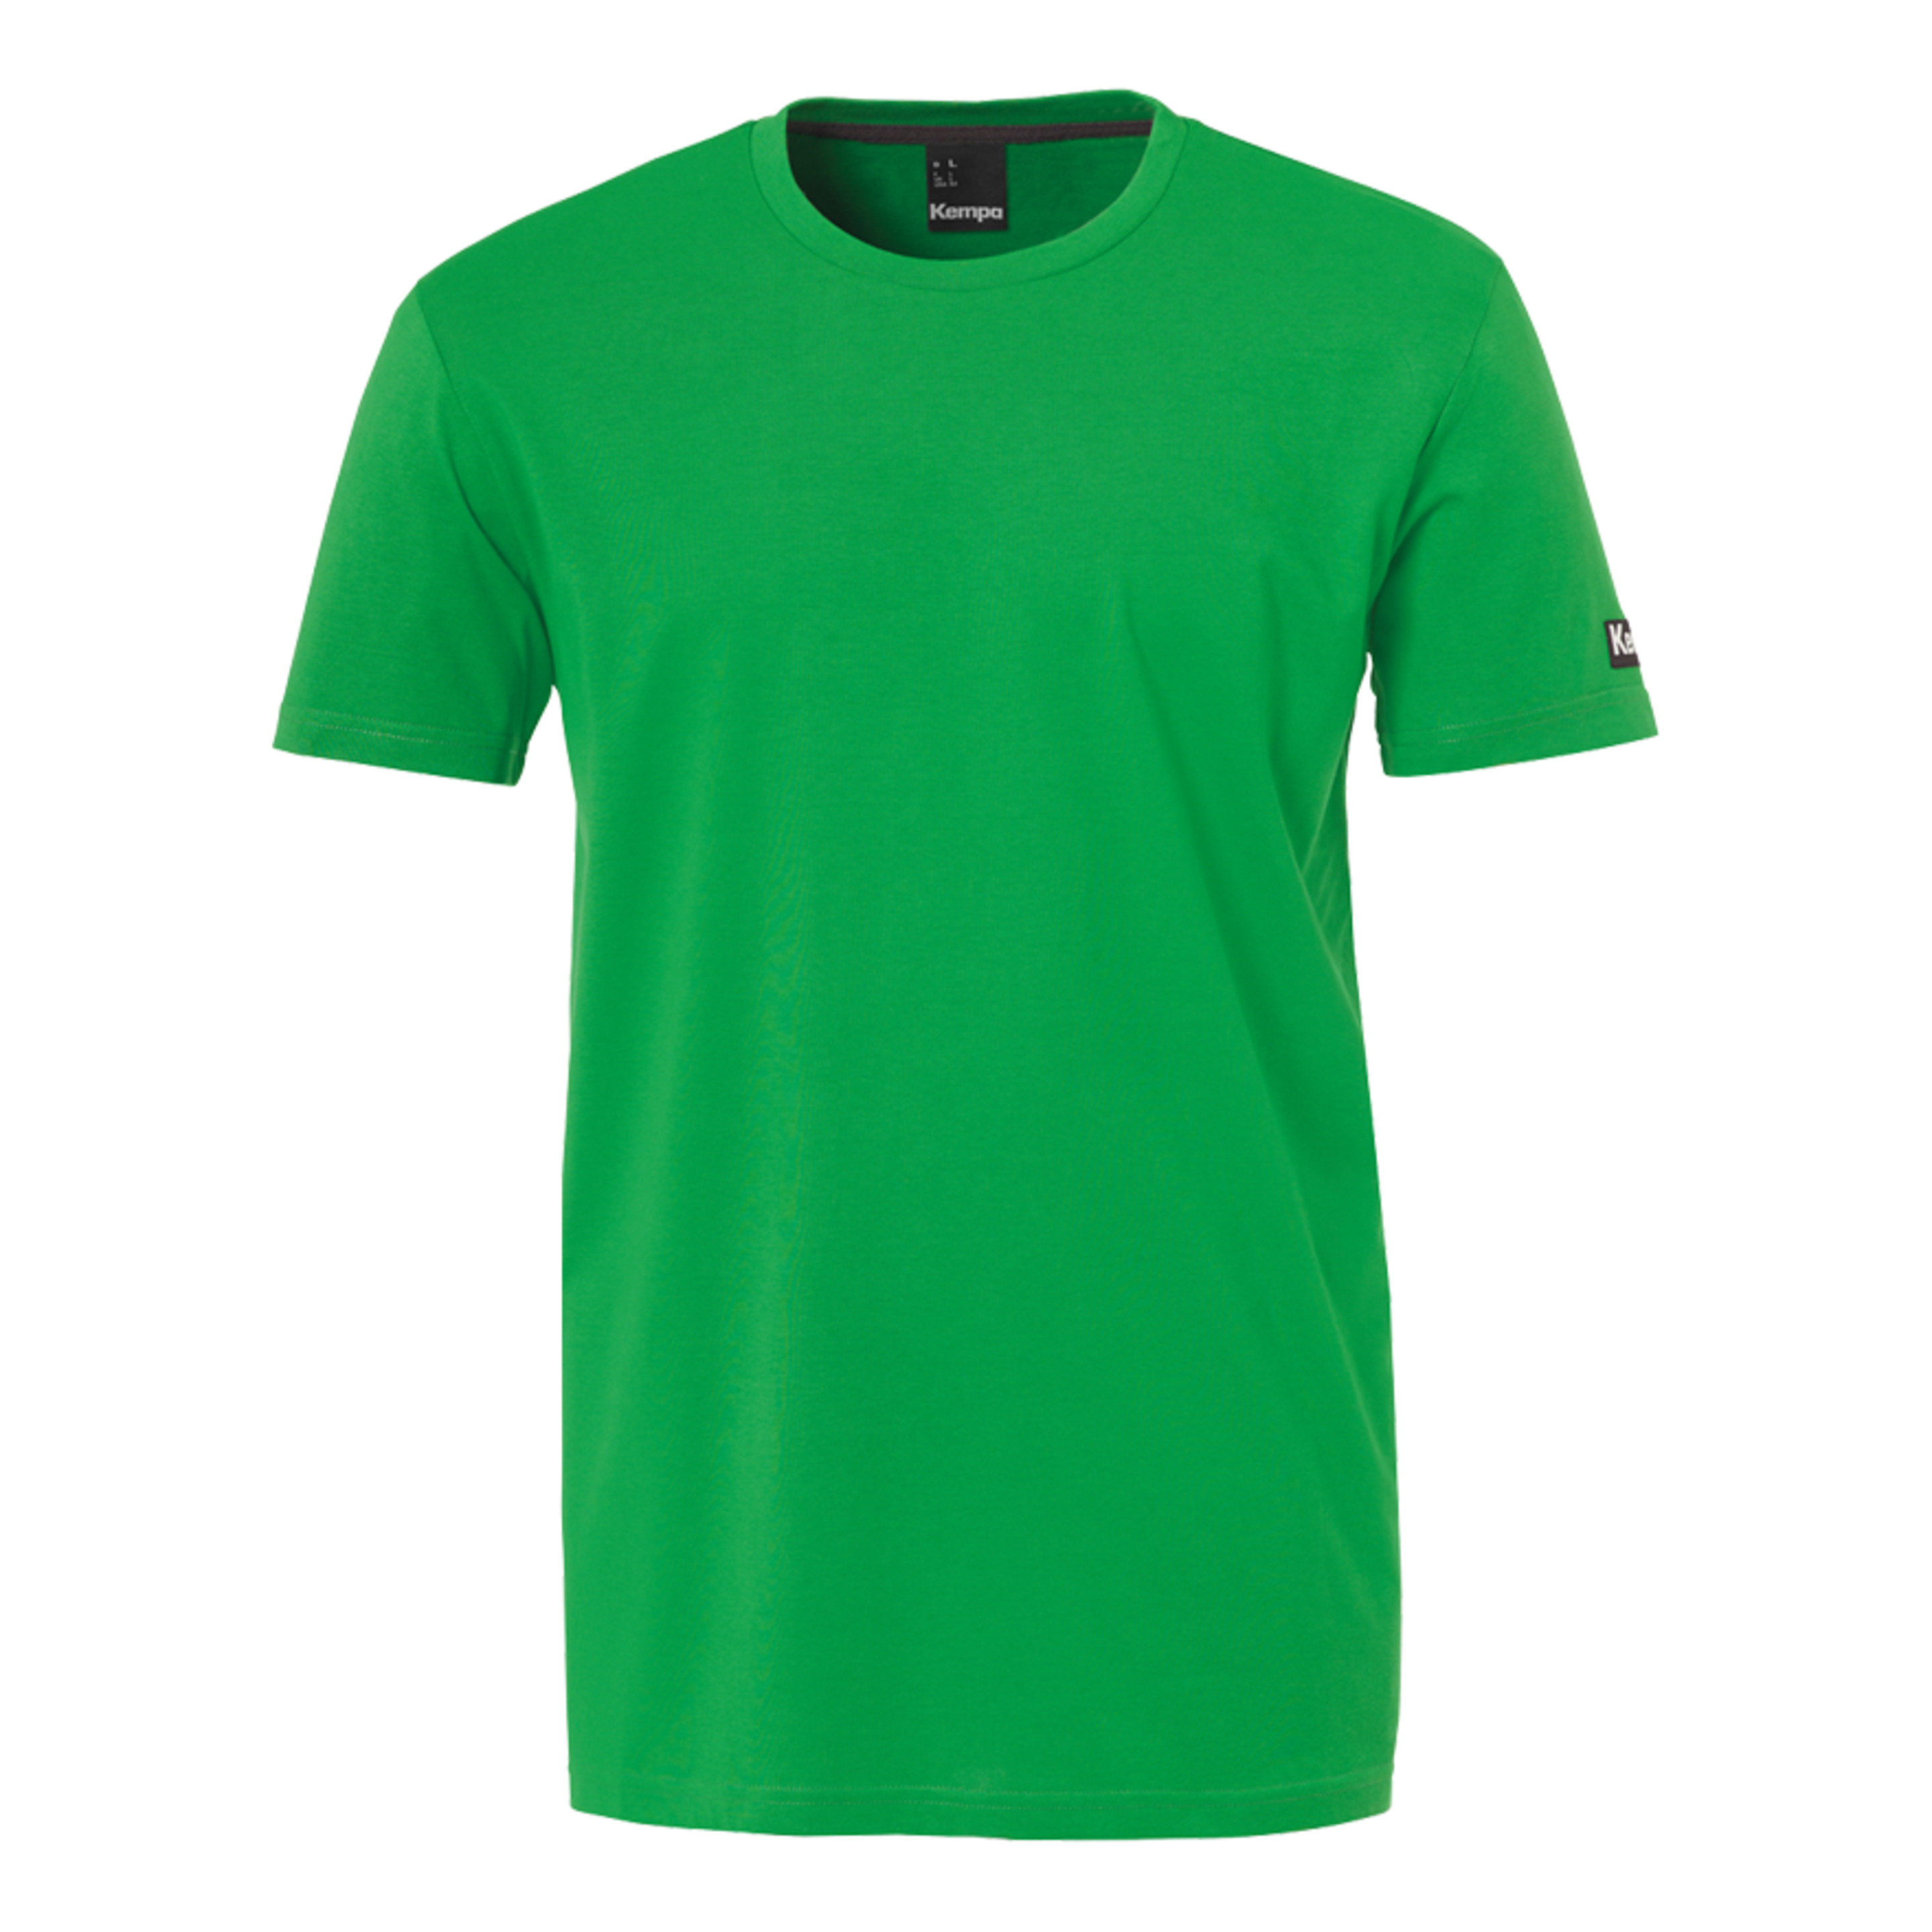 Team Camiseta Verde Kempa - verde - 